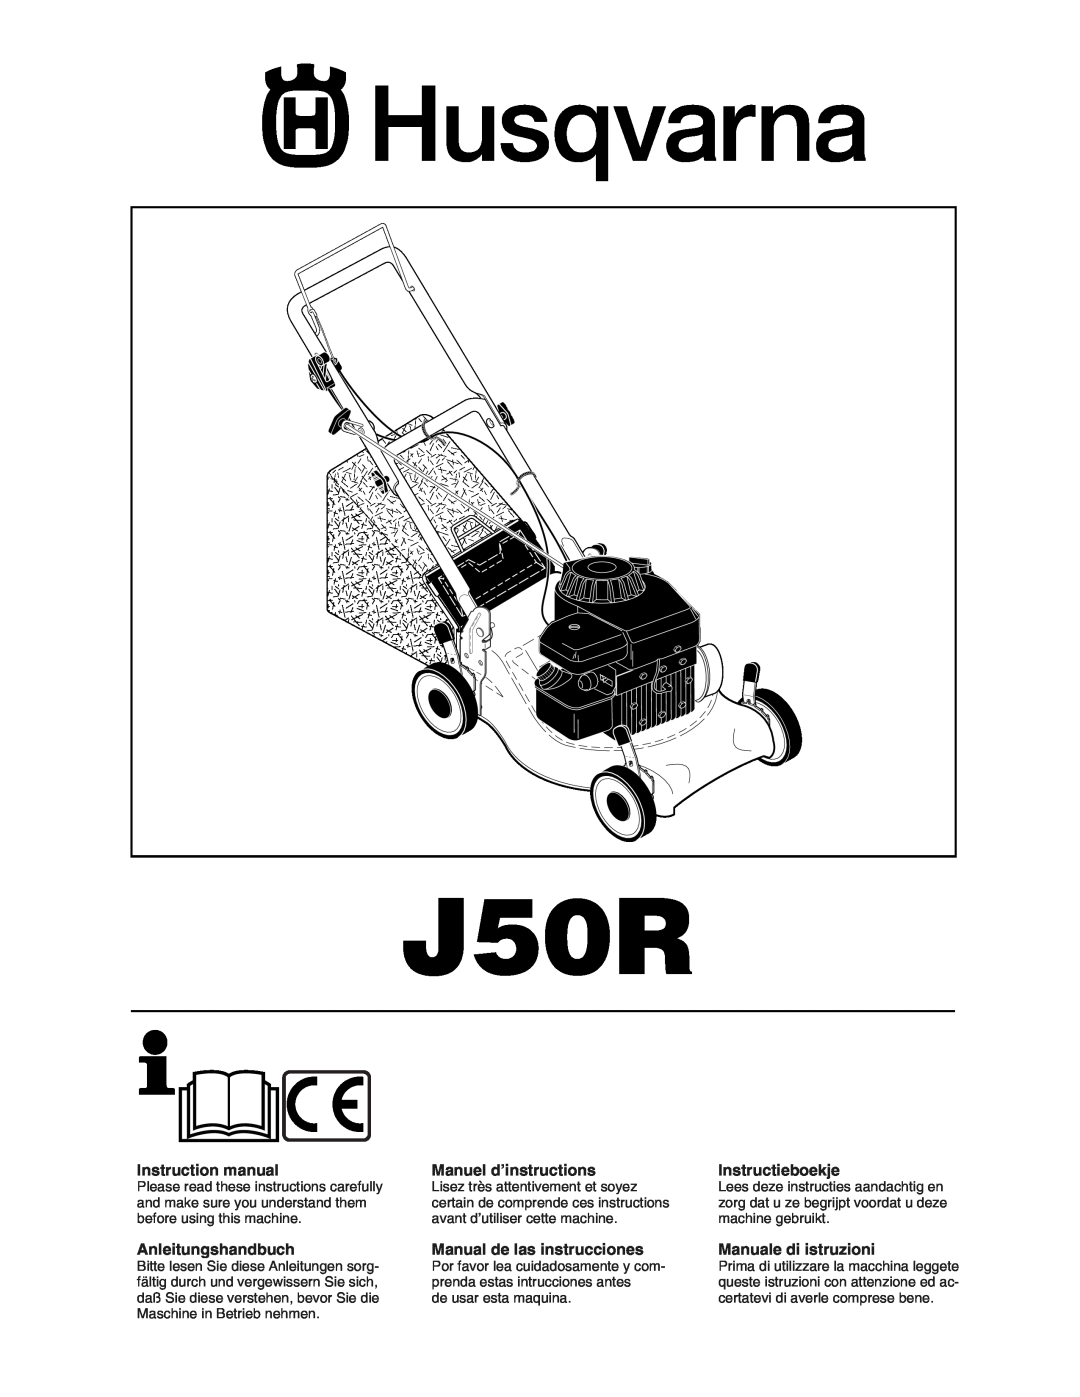 Husqvarna J50R instruction manual Manuel d’instructions, Instructieboekje, Anleitungshandbuch, Manual de las instrucciones 